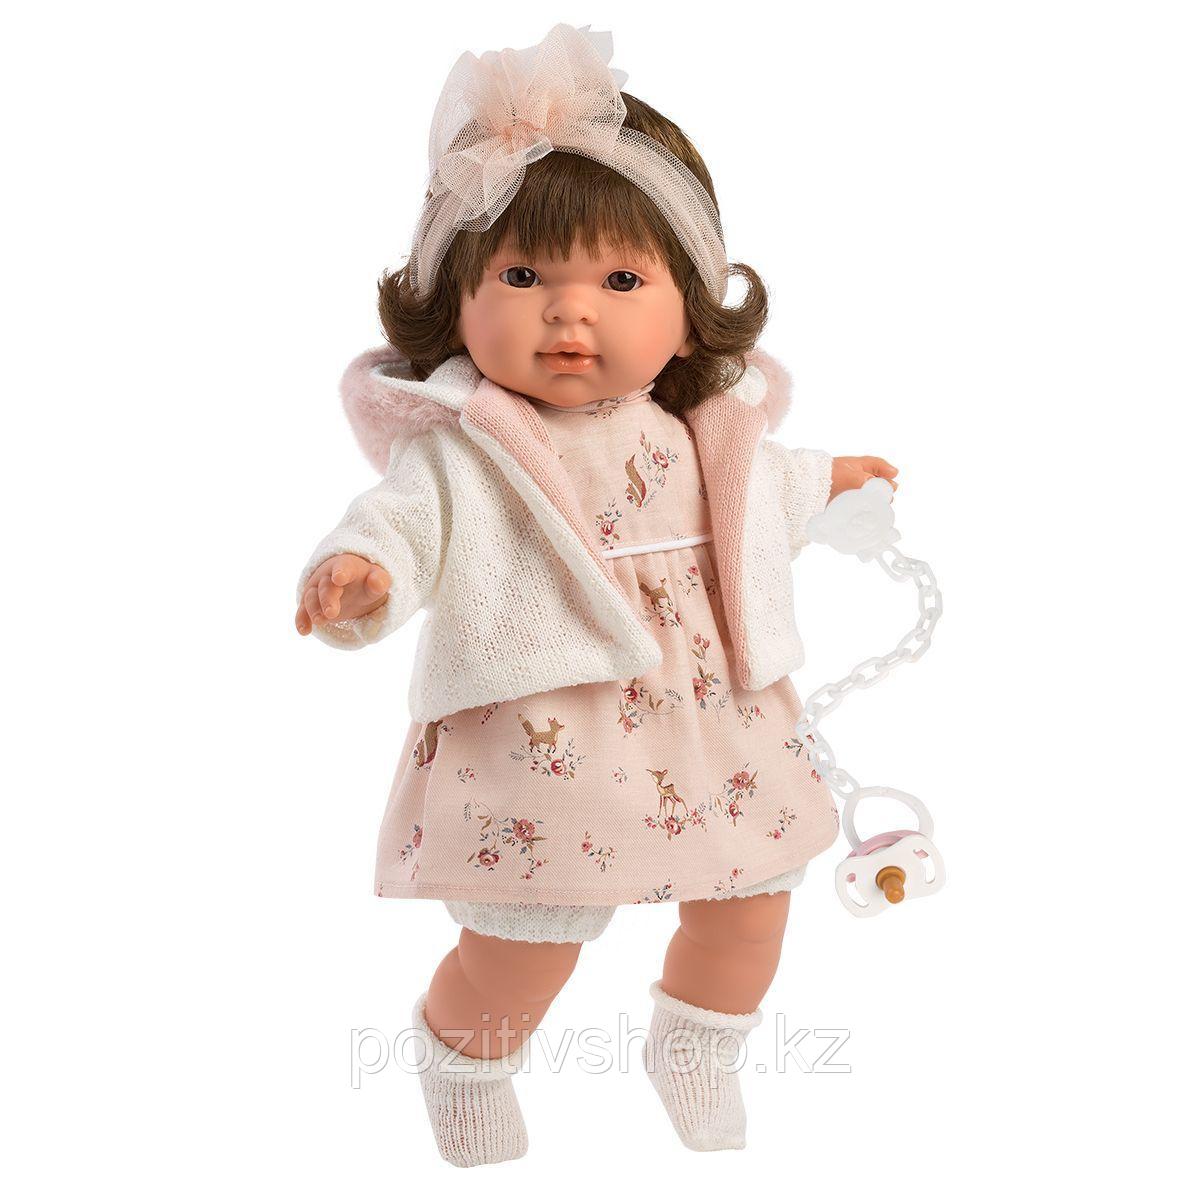 Кукла Llorens Пиппа 42 см., брюнетка в розовом жакете